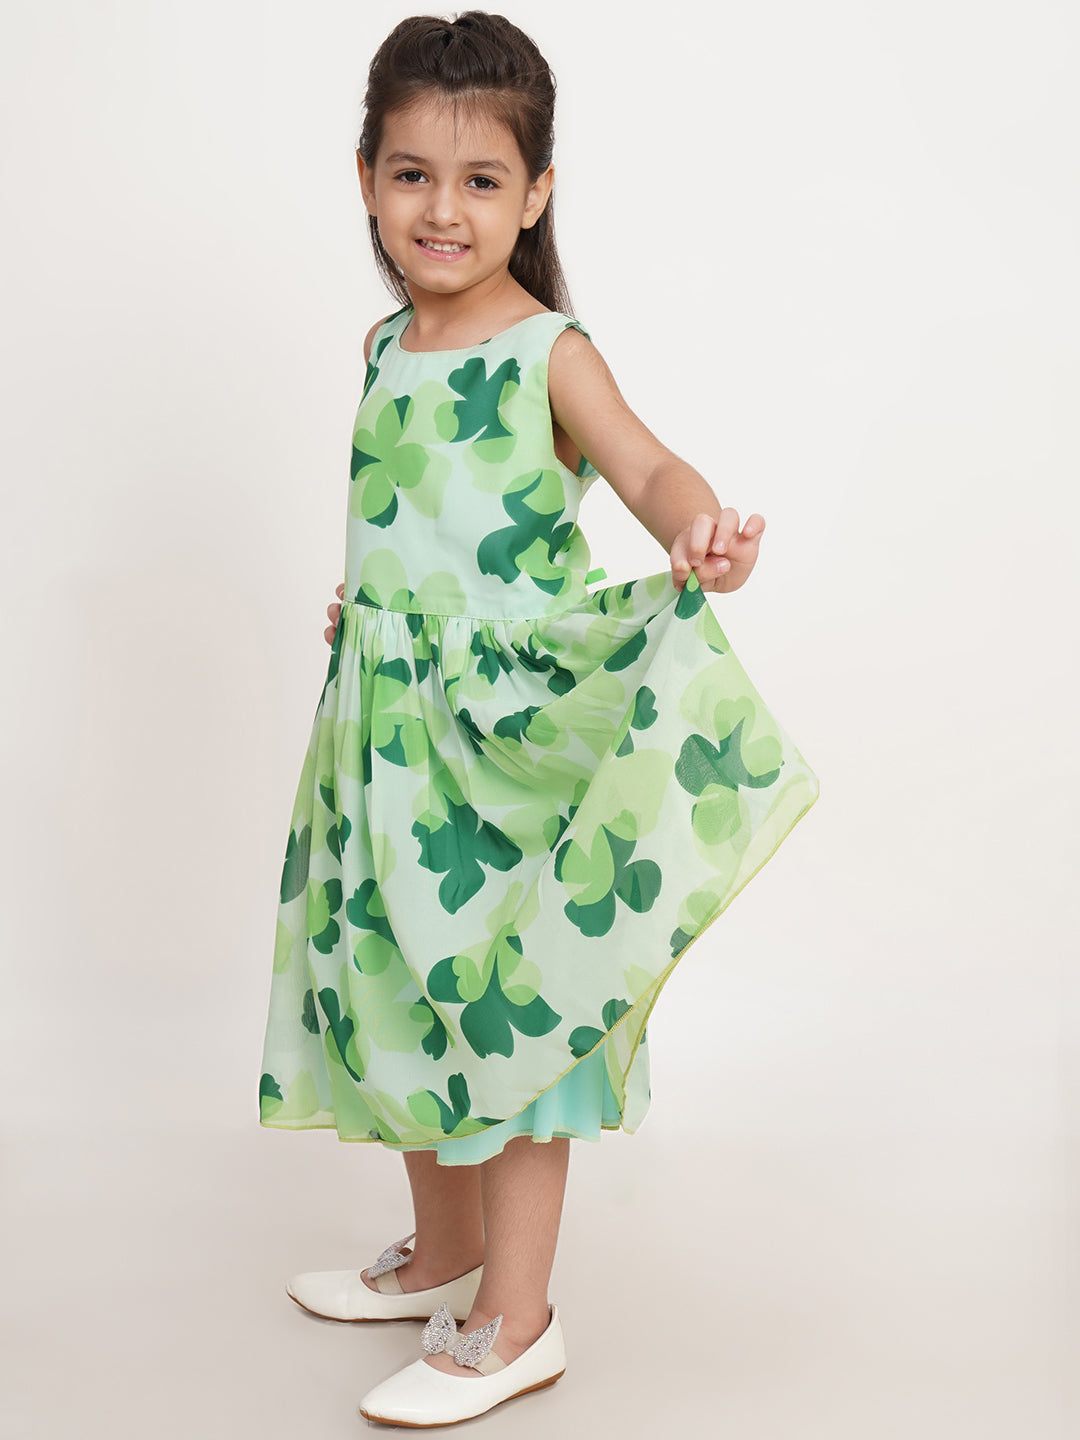 CREATIVE KID'S Girl Green Floral Print A-Line Dress